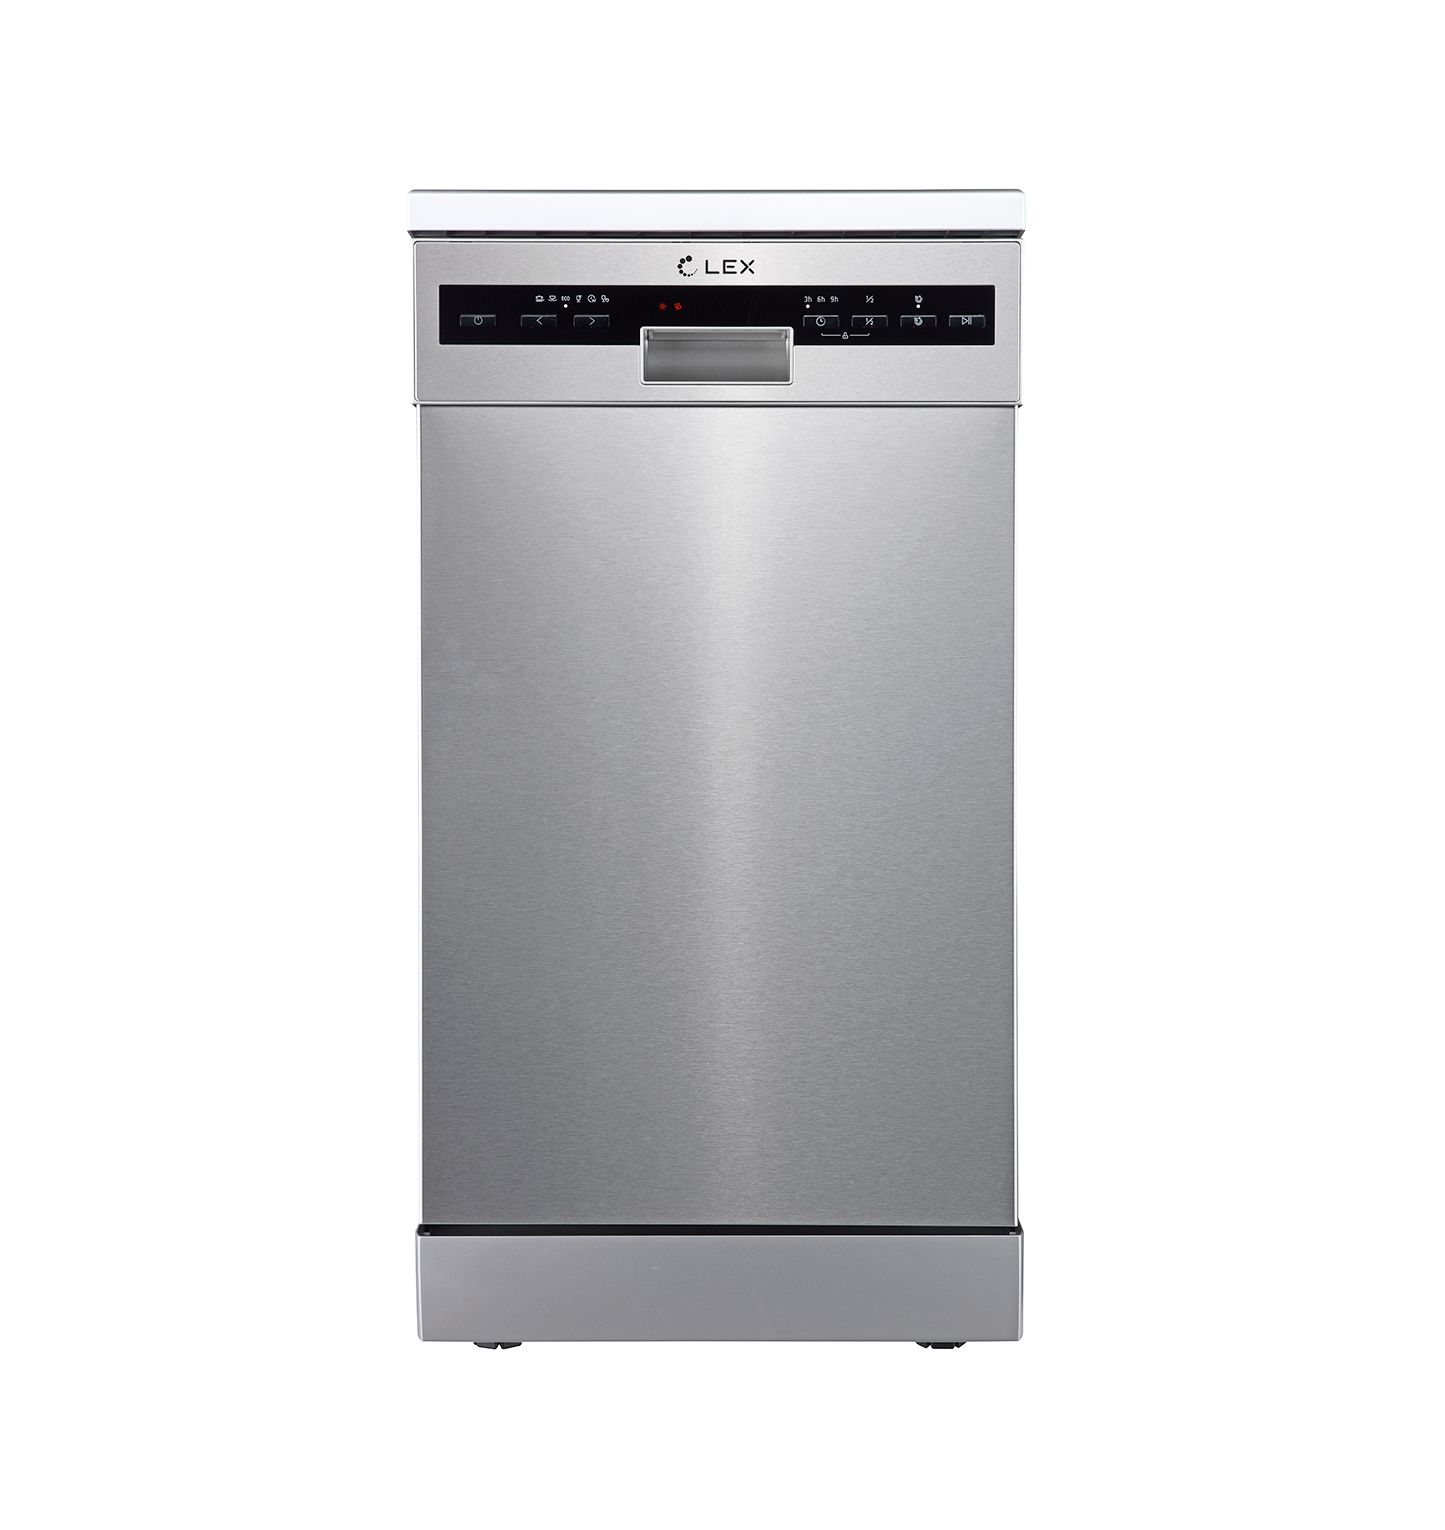 Посудомоечная машина LEX DW 4562 серебристый посудомоечная машина zugel zdf551w белая